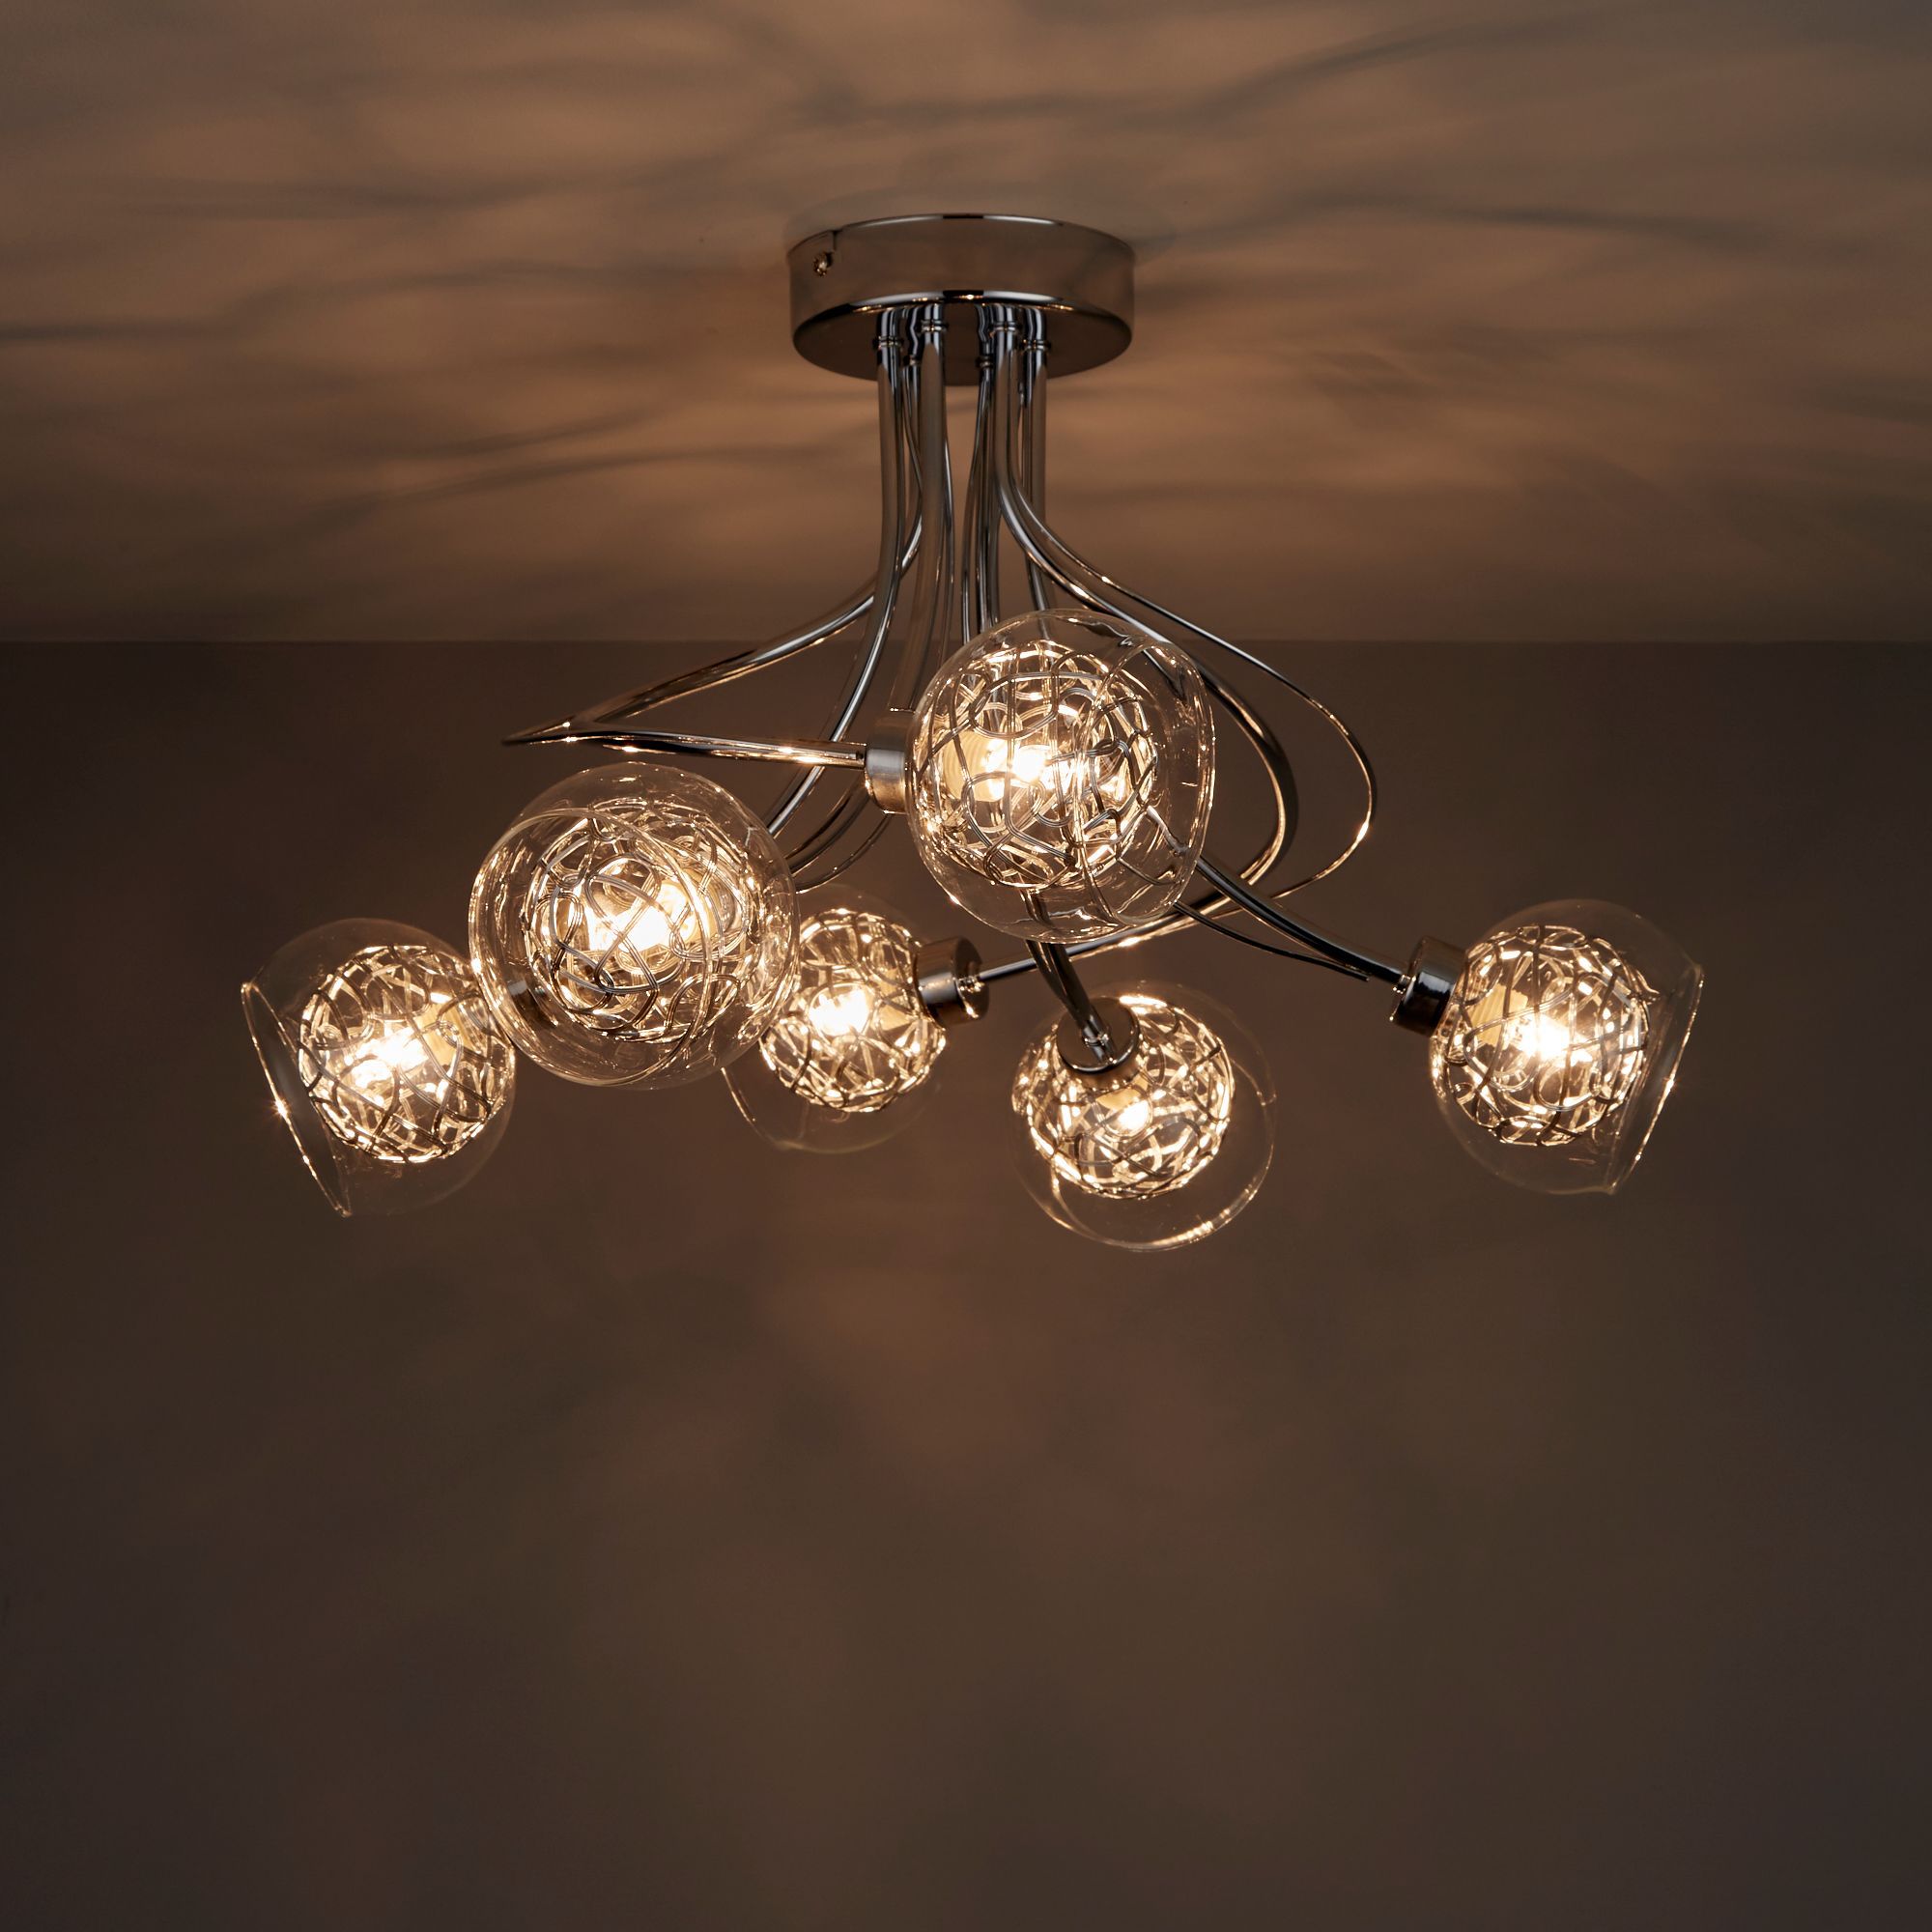 Brushed Colours B&Q LED Lamp Glass 6 effect Carmenta light metal DIY at Twist Chrome Ceiling & |